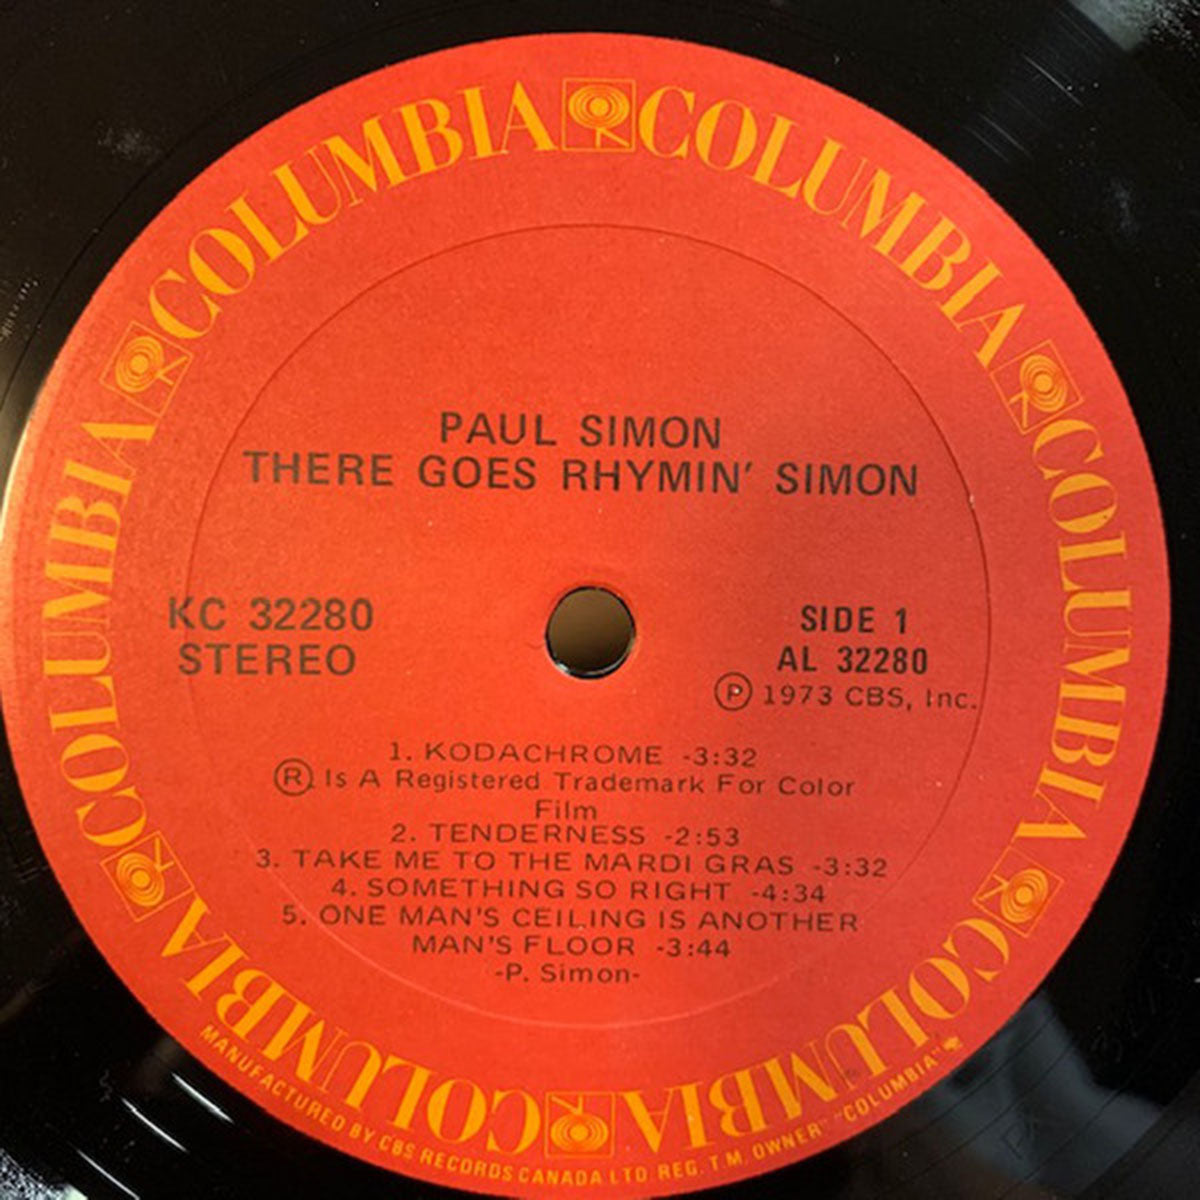 Paul Simon – There Goes Rhymin' Simon - 1973